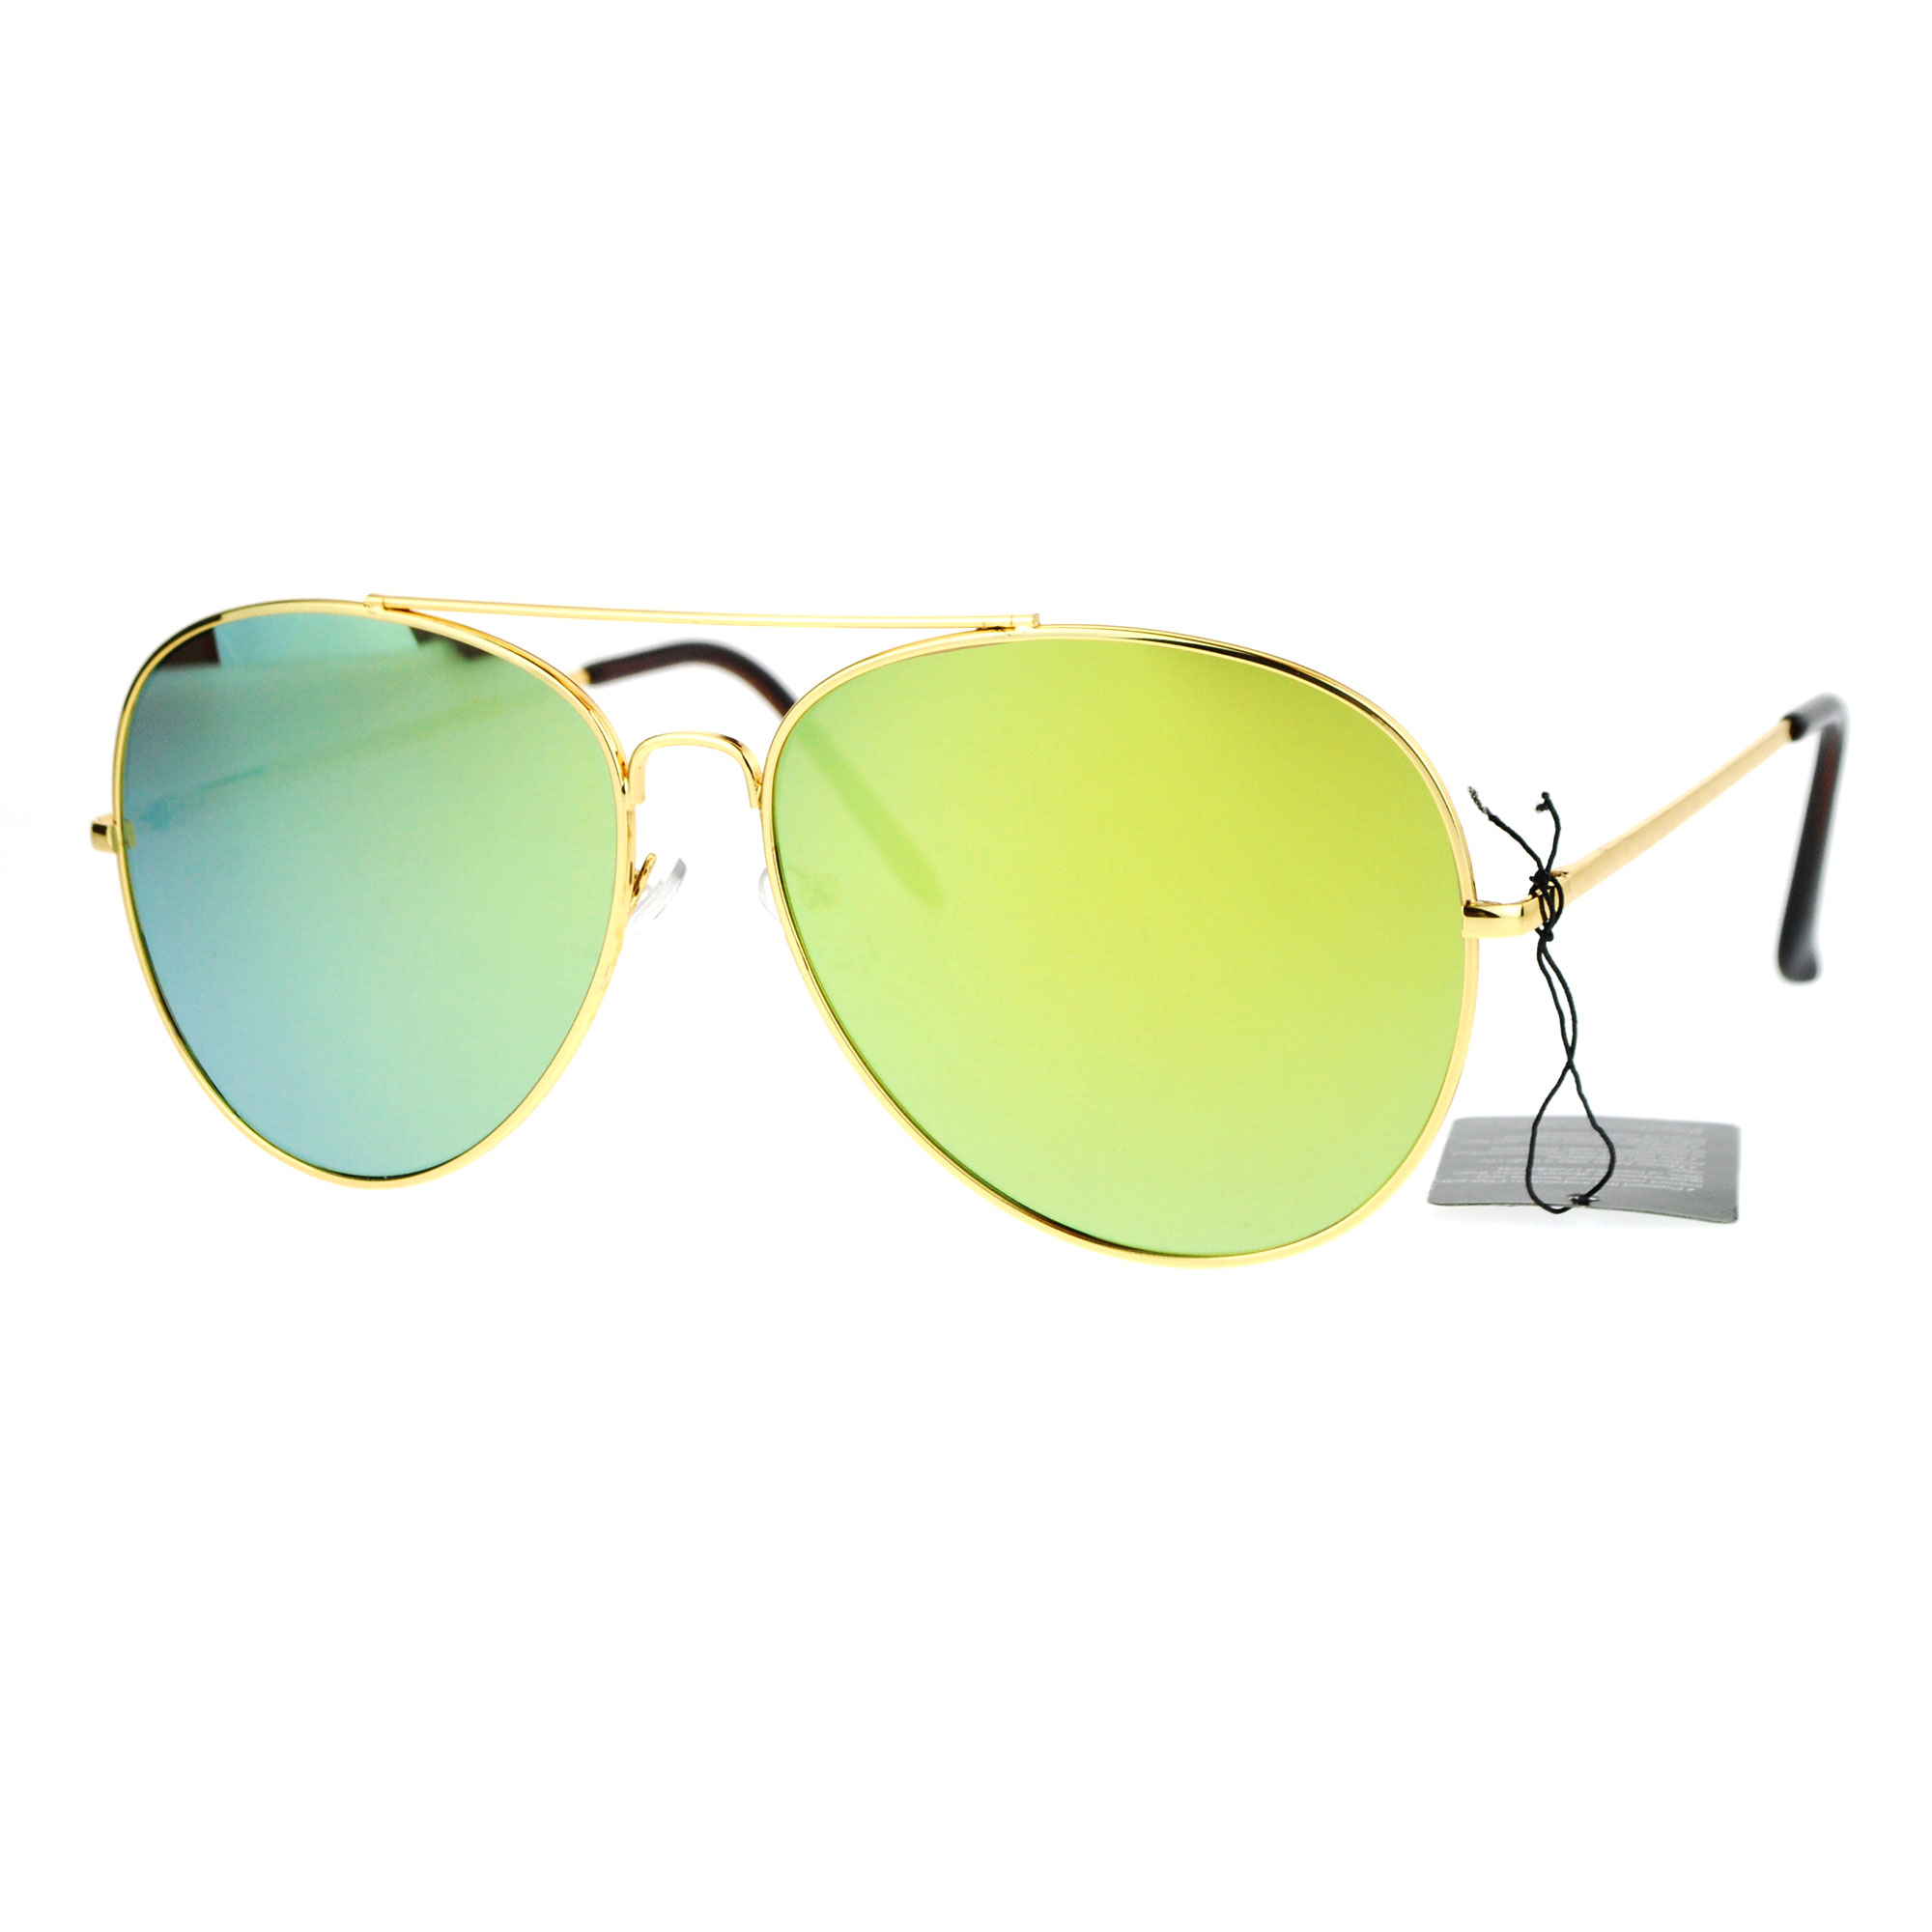 Sa106 Mens Color Mirror Retro Flat Lens Metal Sunglasses Ebay